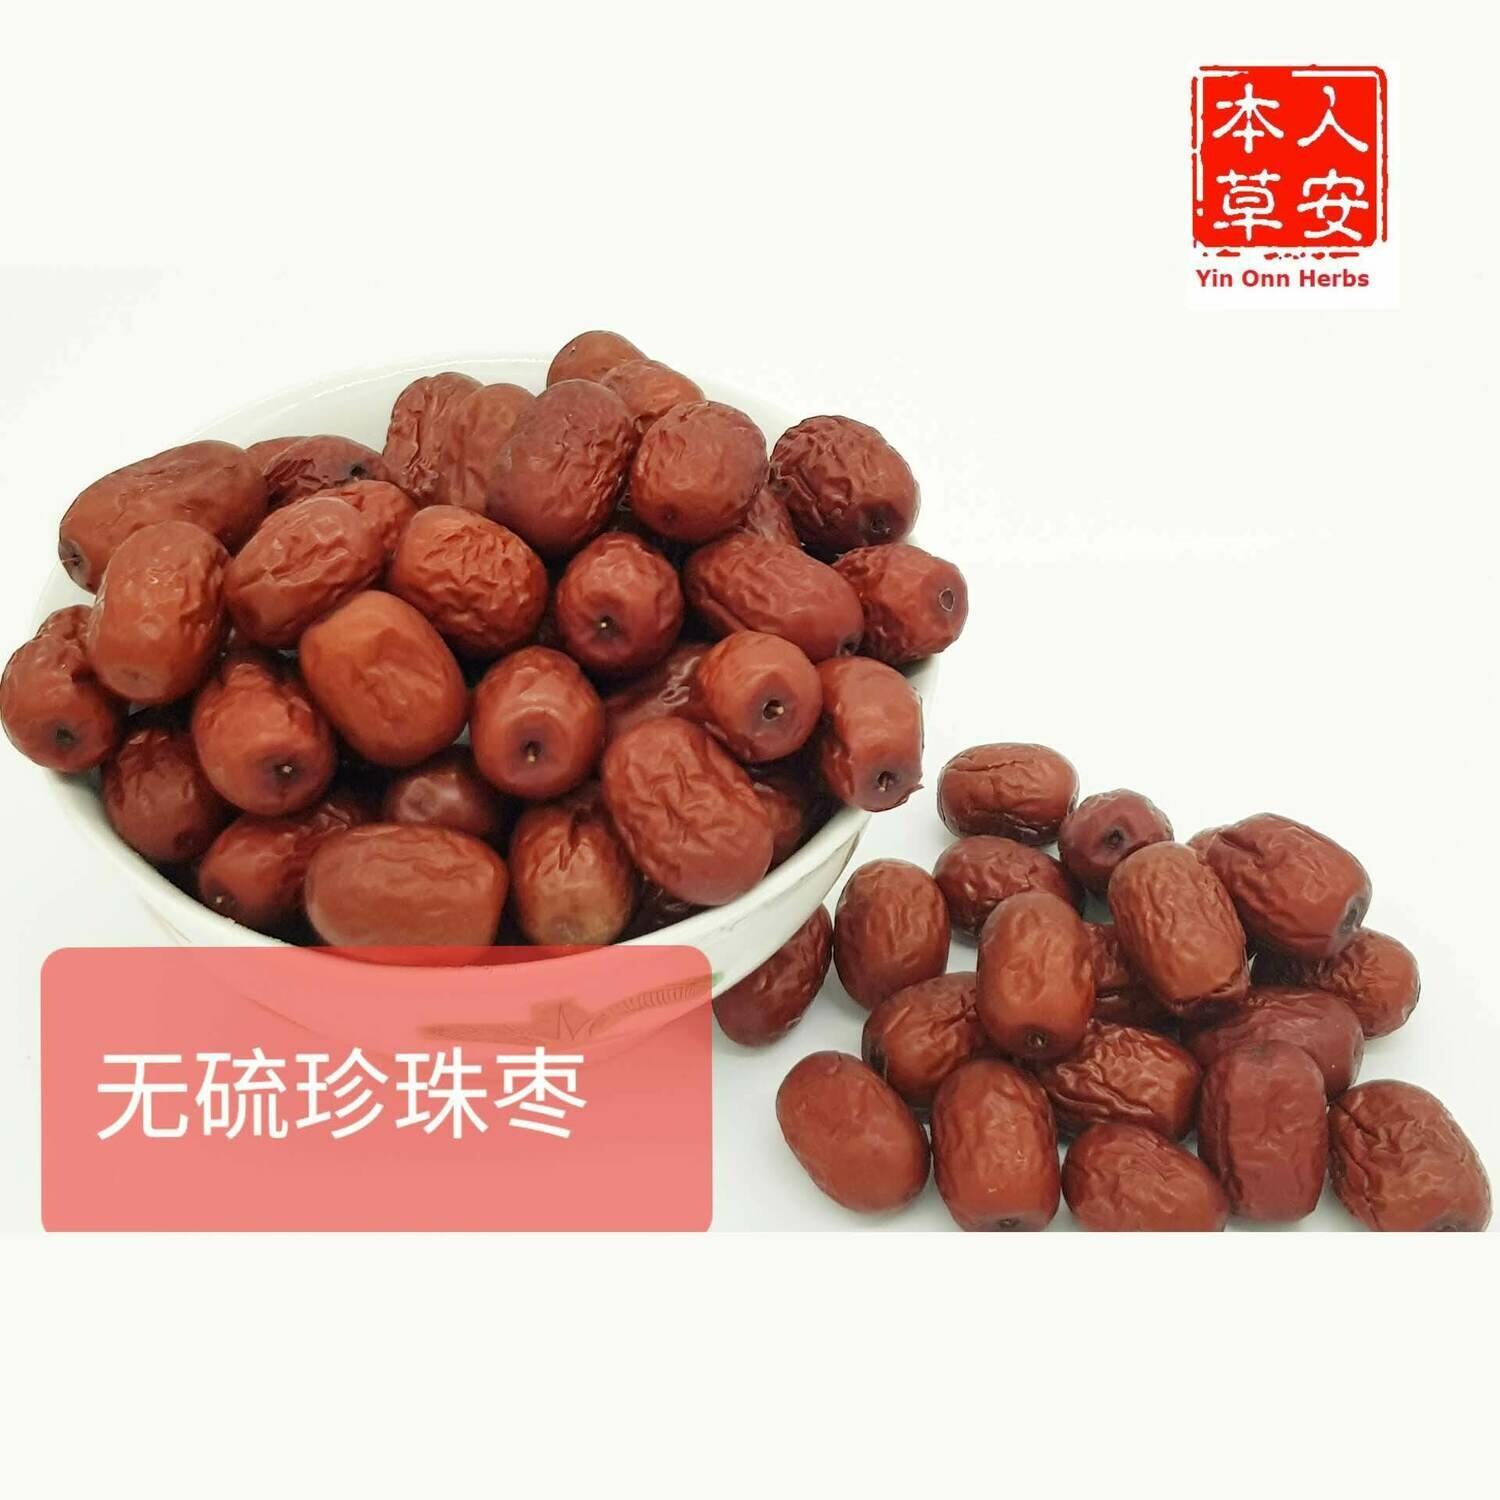 无硫新疆珍珠红枣500gm XinJiang Pearl Red Dates